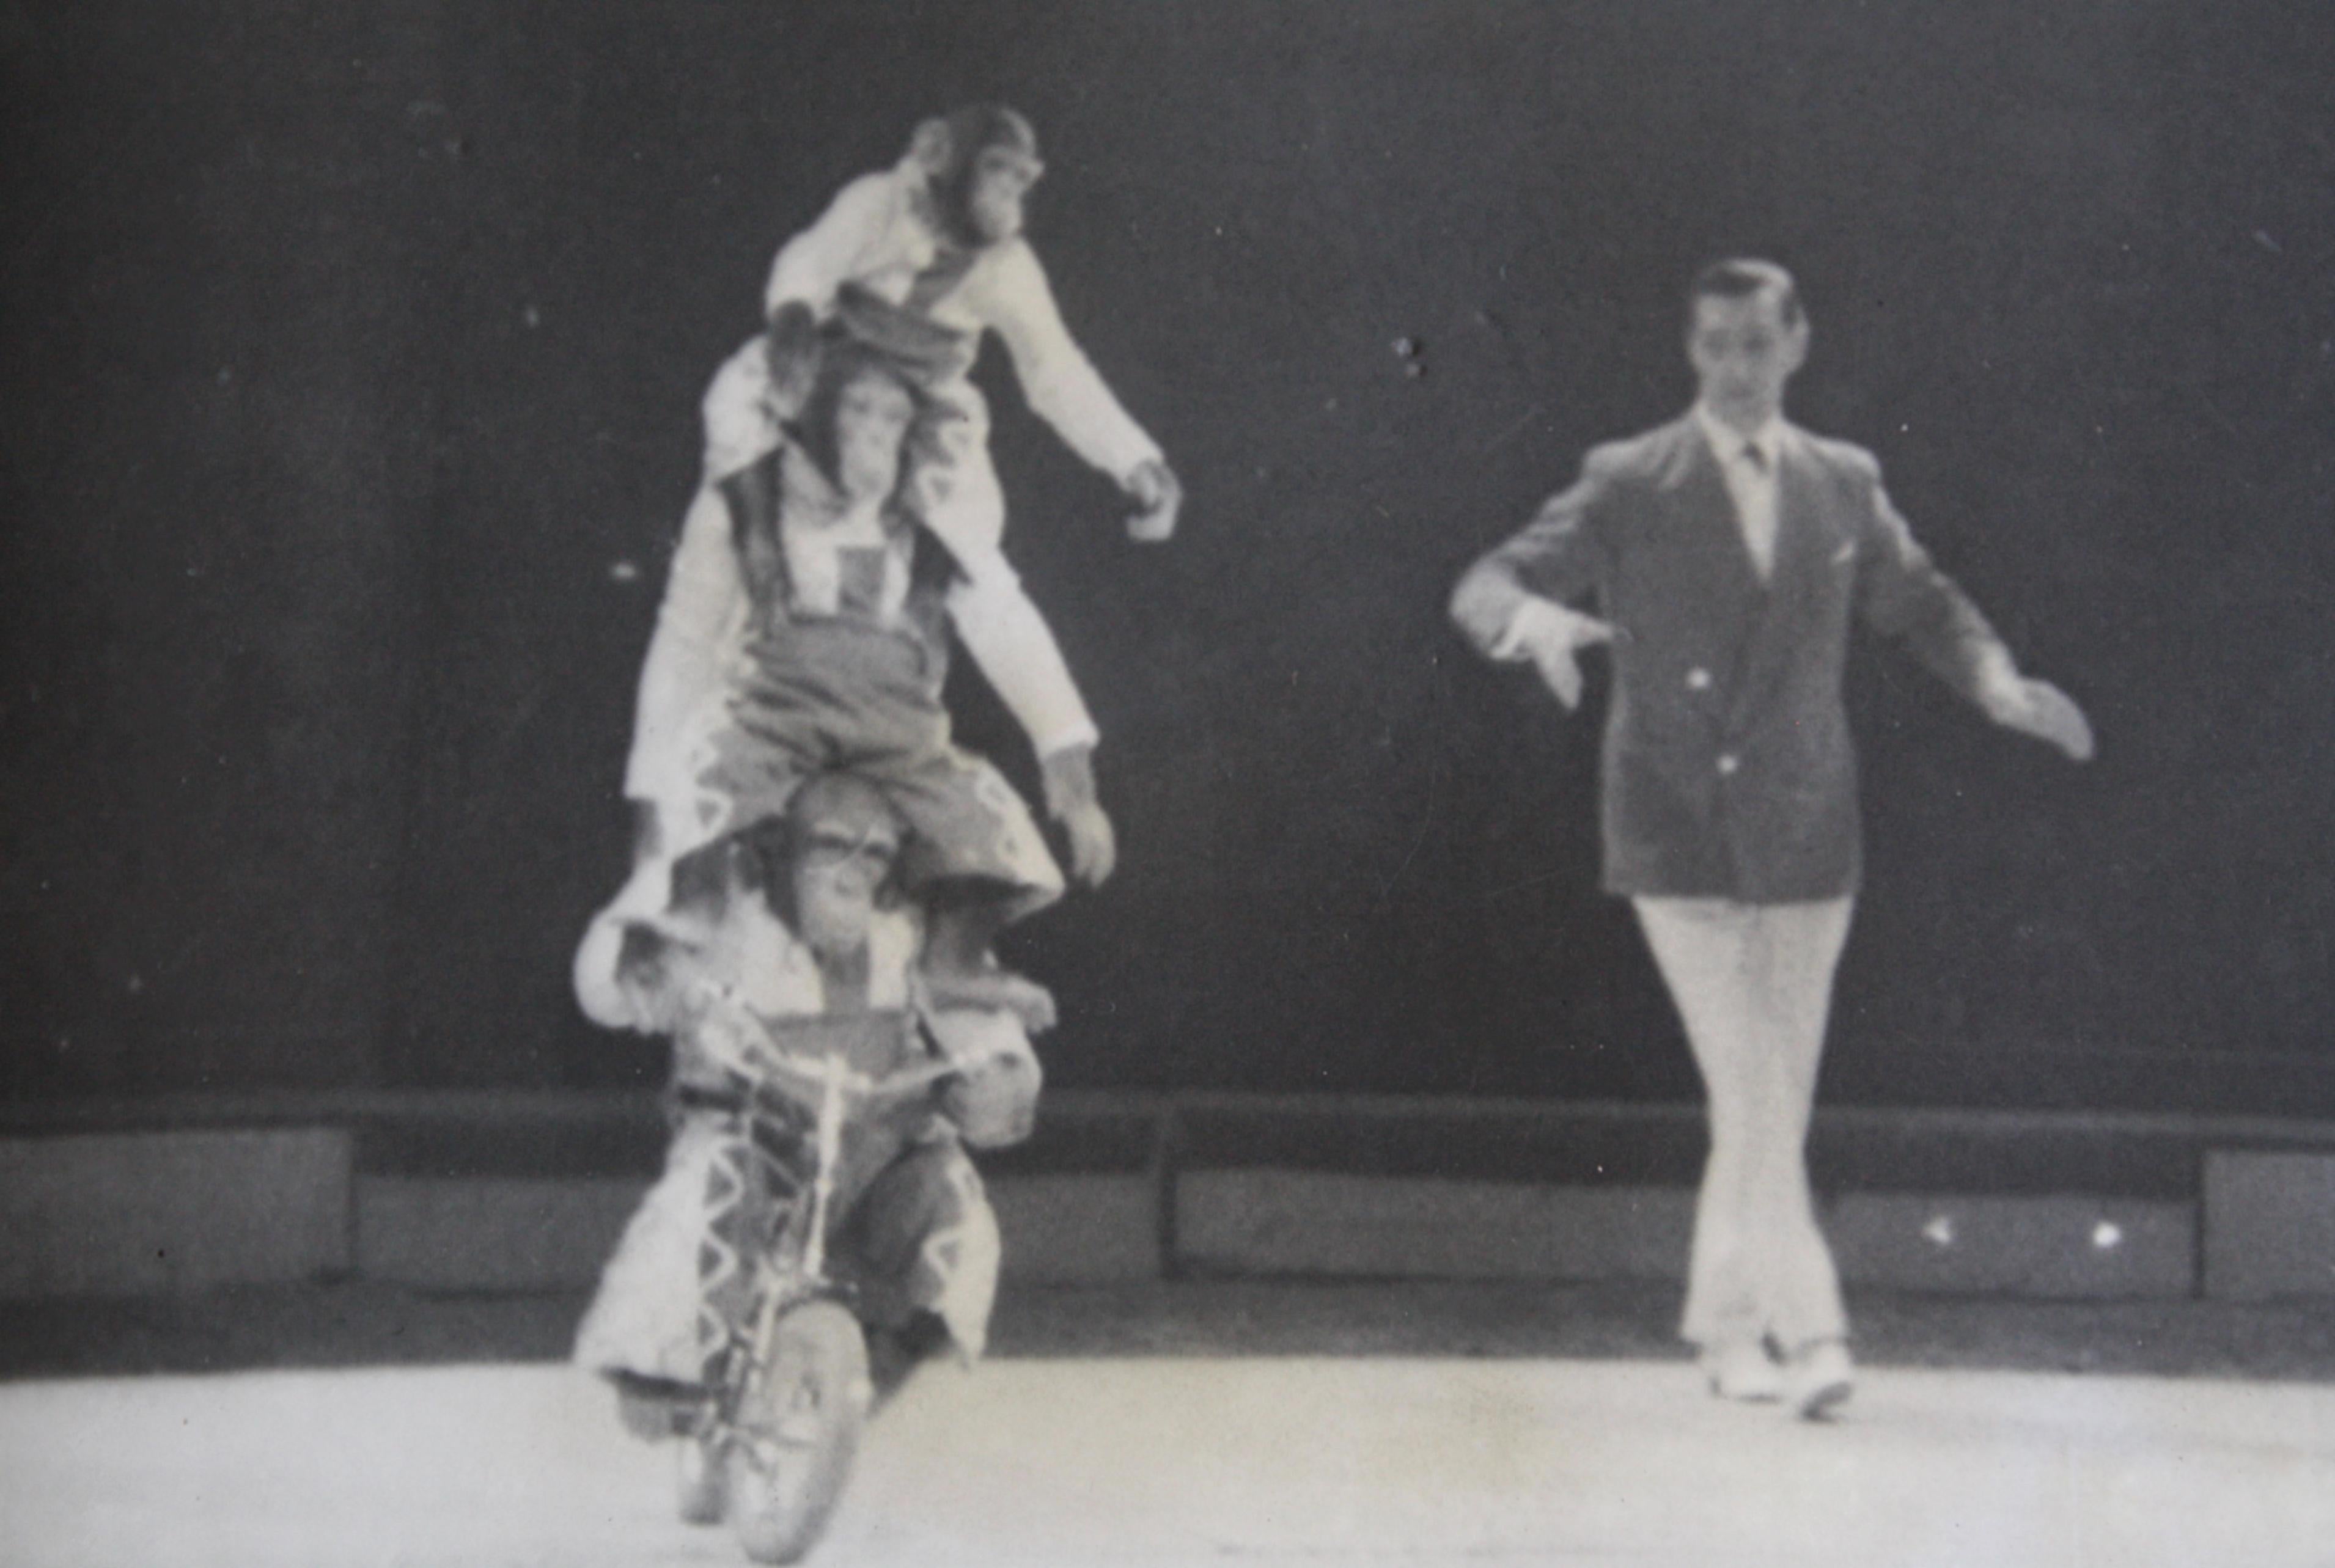 European Circus Gelatin Silver Prints Photography in the Manner of Kurt Hutton circa 1940